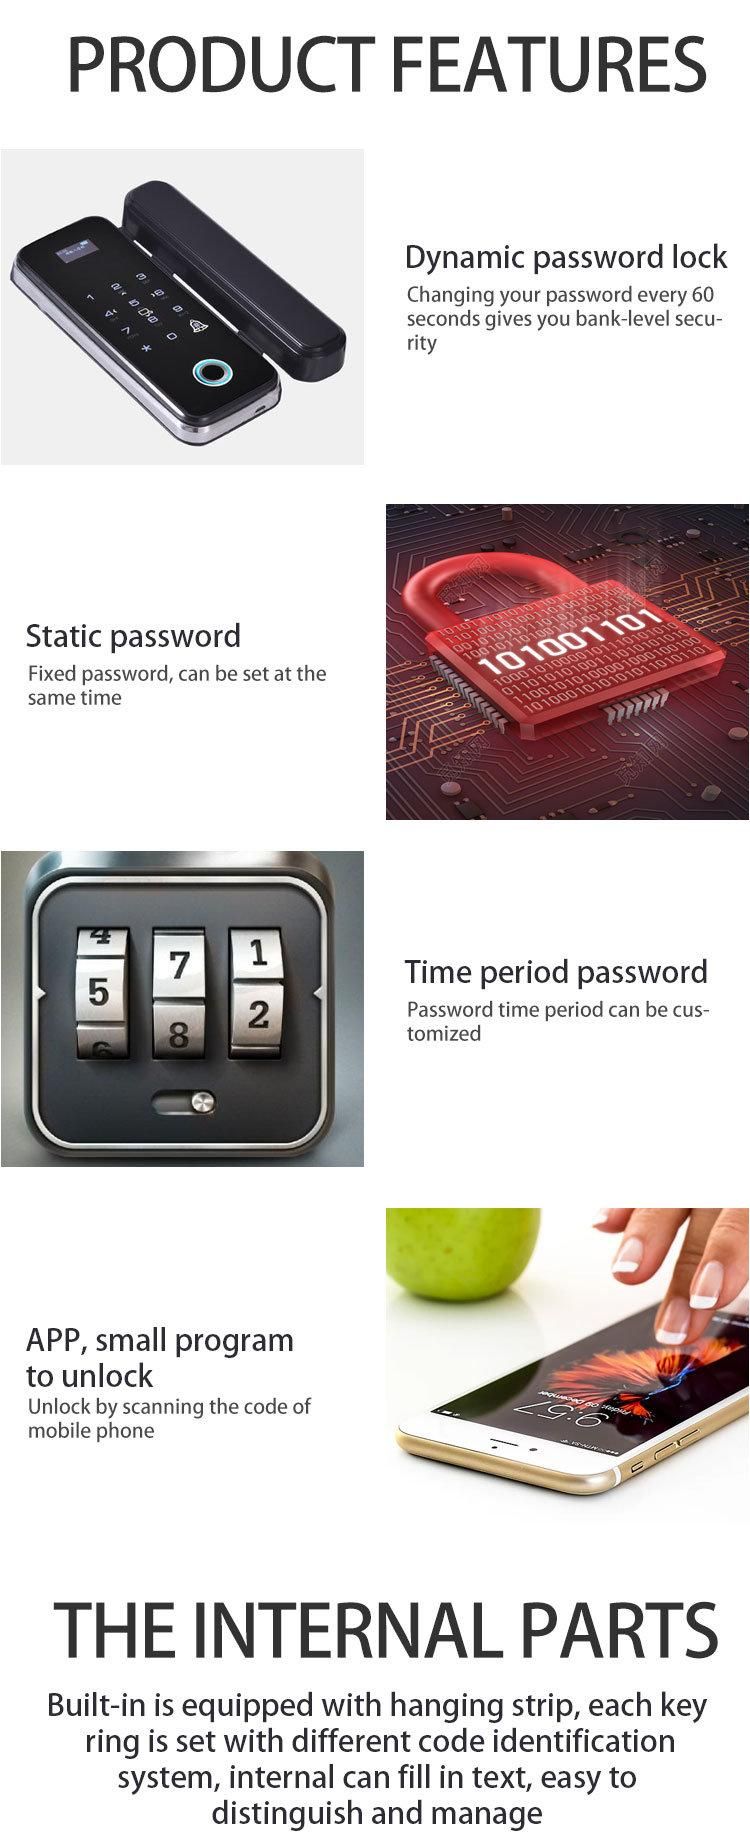 Whole Sale Auto Hotel Key Management Locker Smart Key Locker